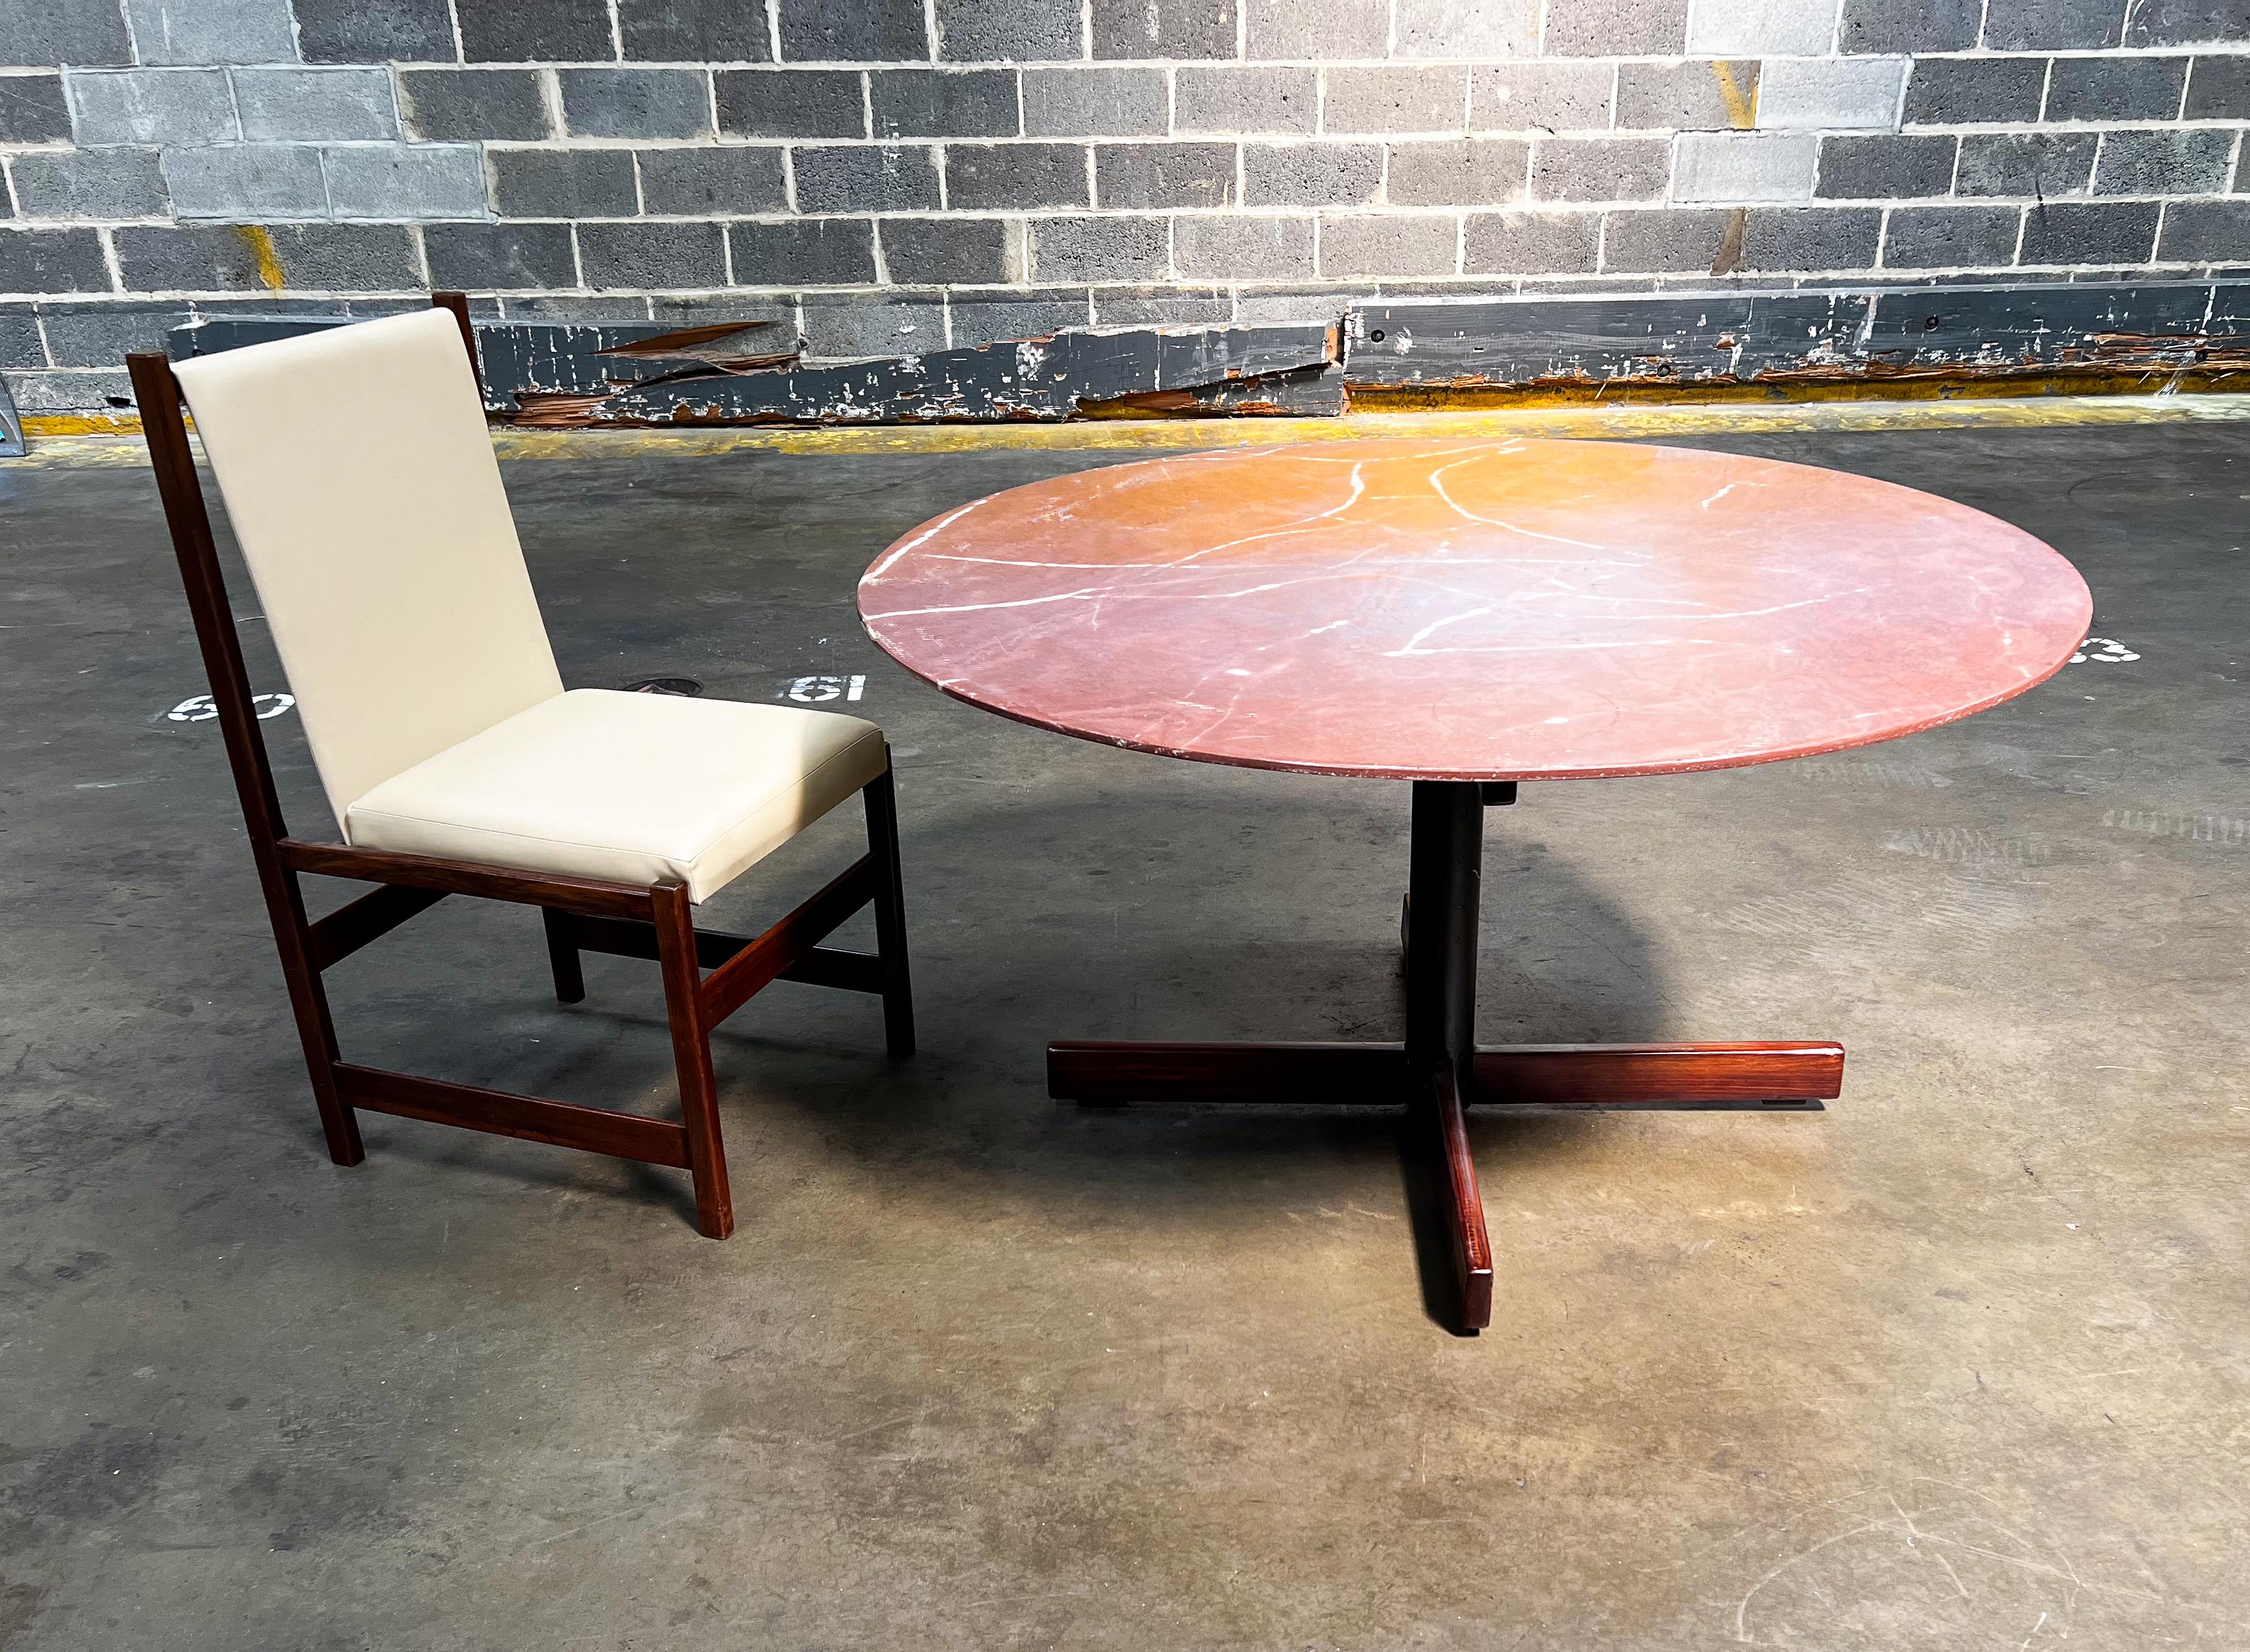 Midcentury Modern Round Table in Hardwood & Granite by Jorge Zalszupin, Brazil For Sale 2